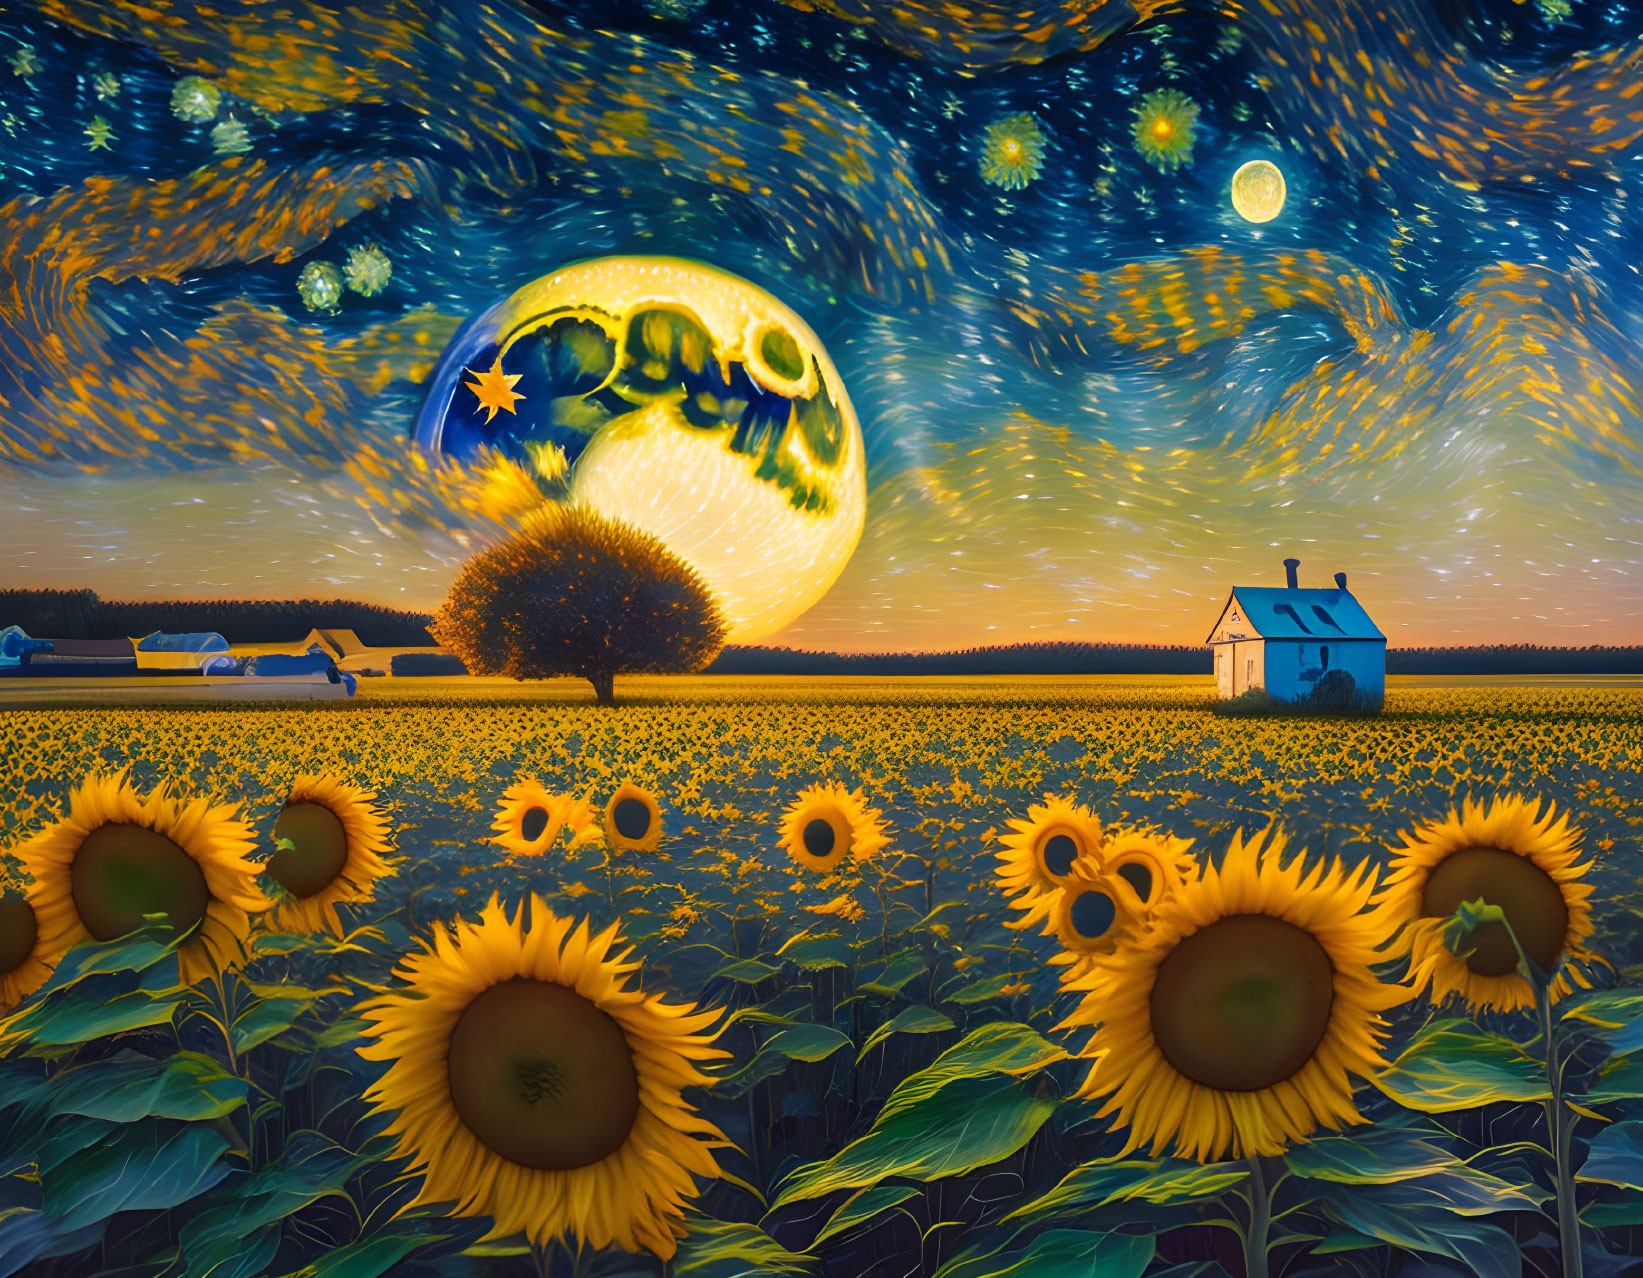 Sunflower Field on a Moonlit Night